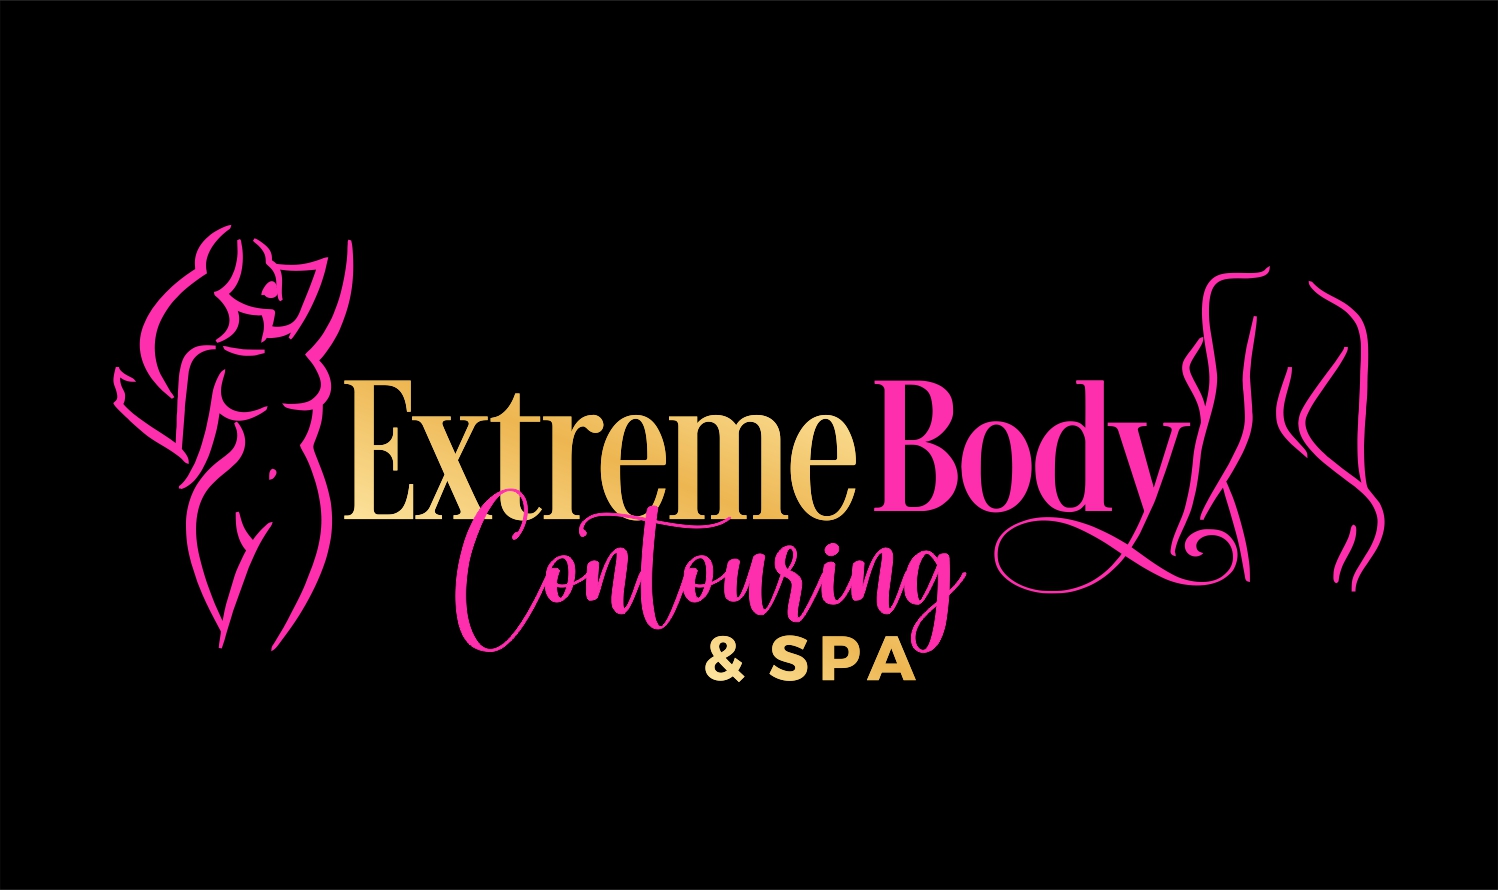 Extreme Body Contouring & Spa